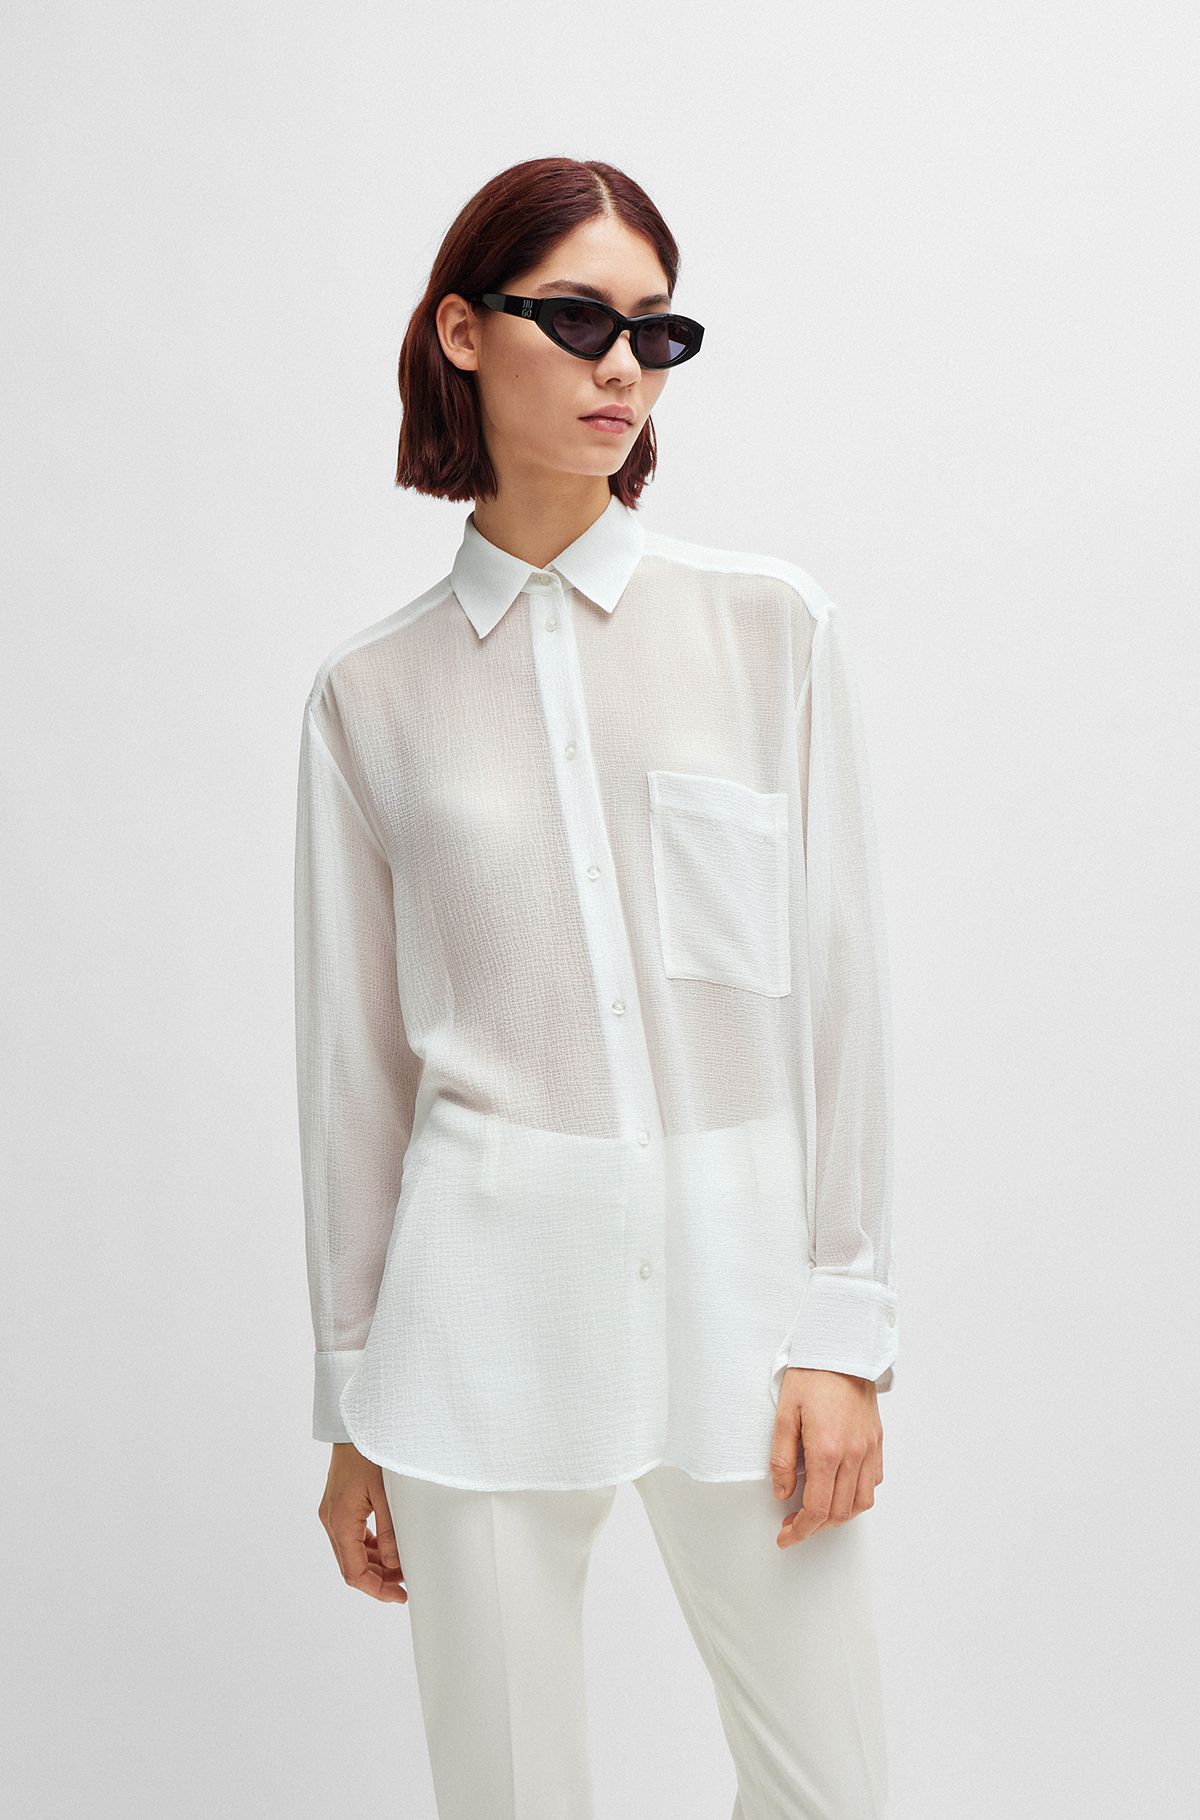 Women Fashion Formal Shirt Clothes Slim Long Sleeve White Blouse Elegant OL